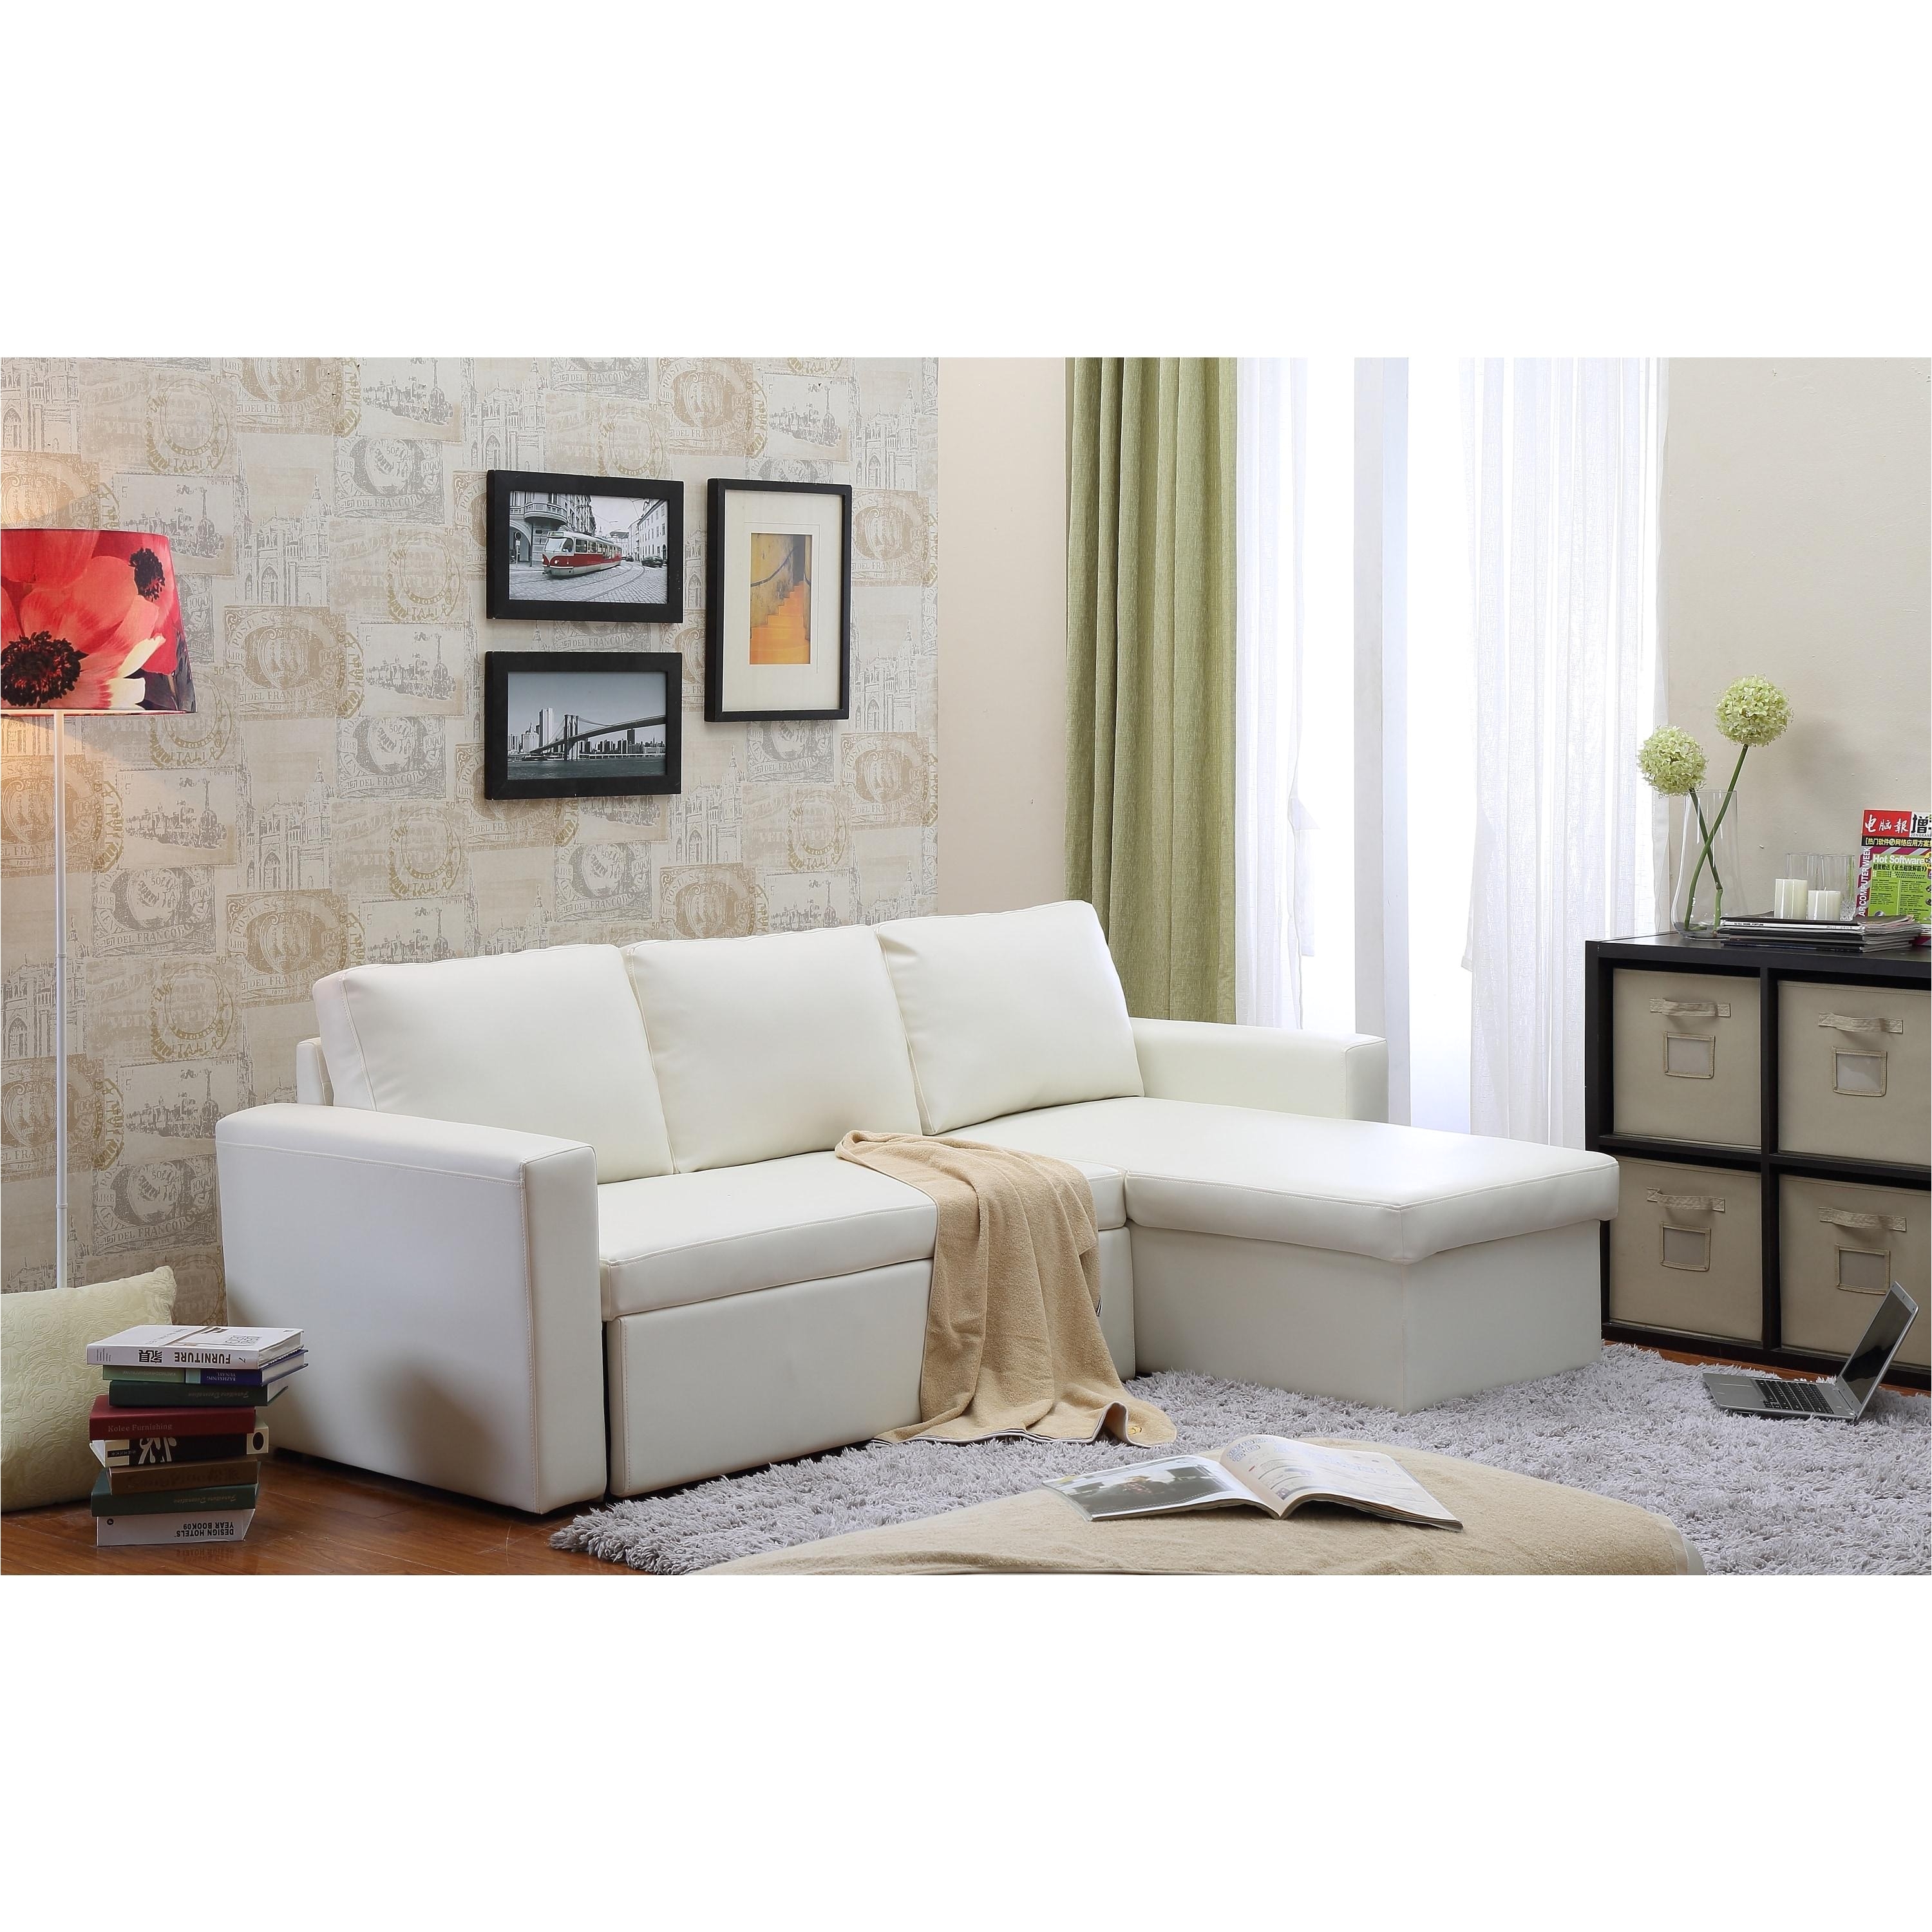 Sectional sofa Designs Unique Furniture T Cushion Loveseat Slipcover Unique Navy Loveseat 0d